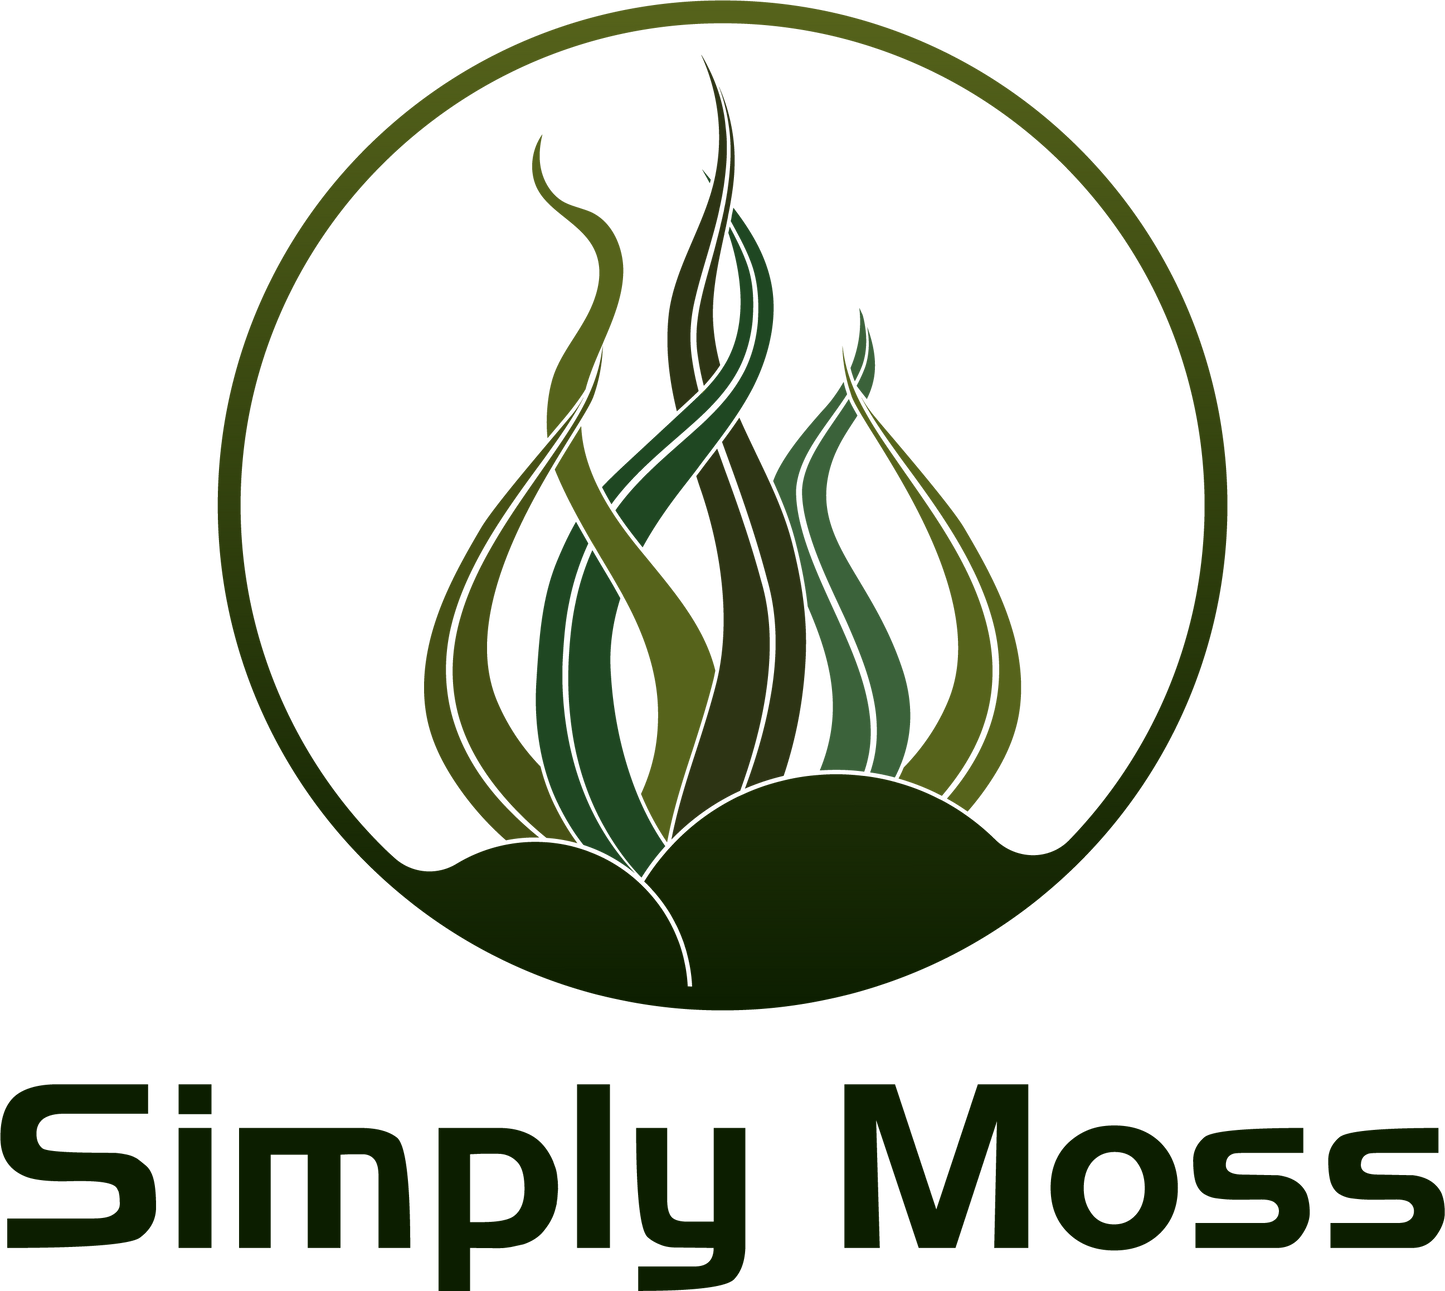 Simply moss